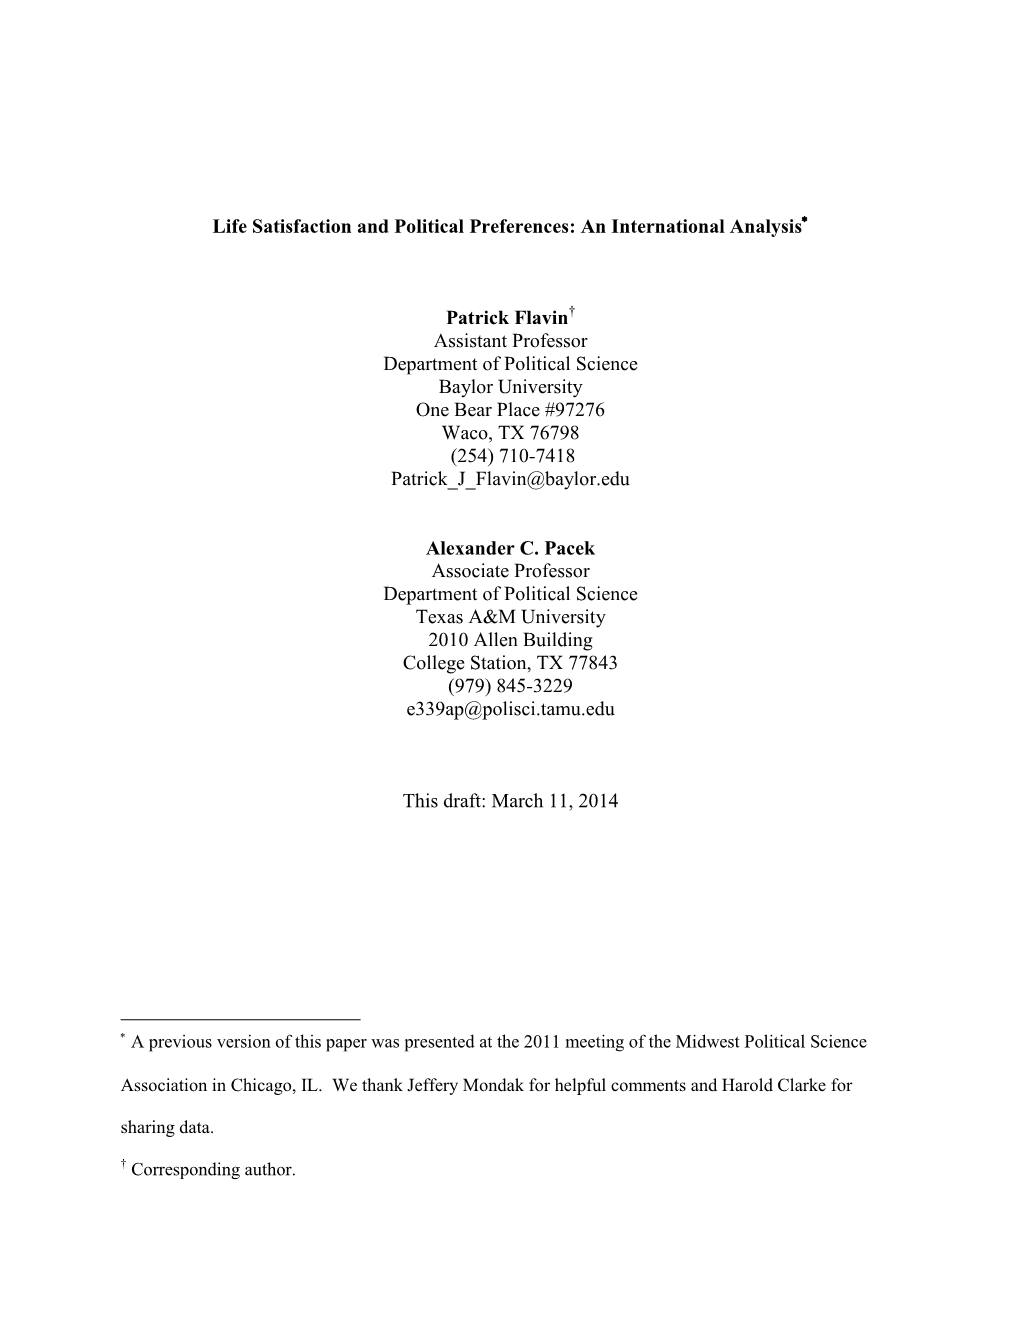 Life Satisfaction and Political Preferences: an International Analysis